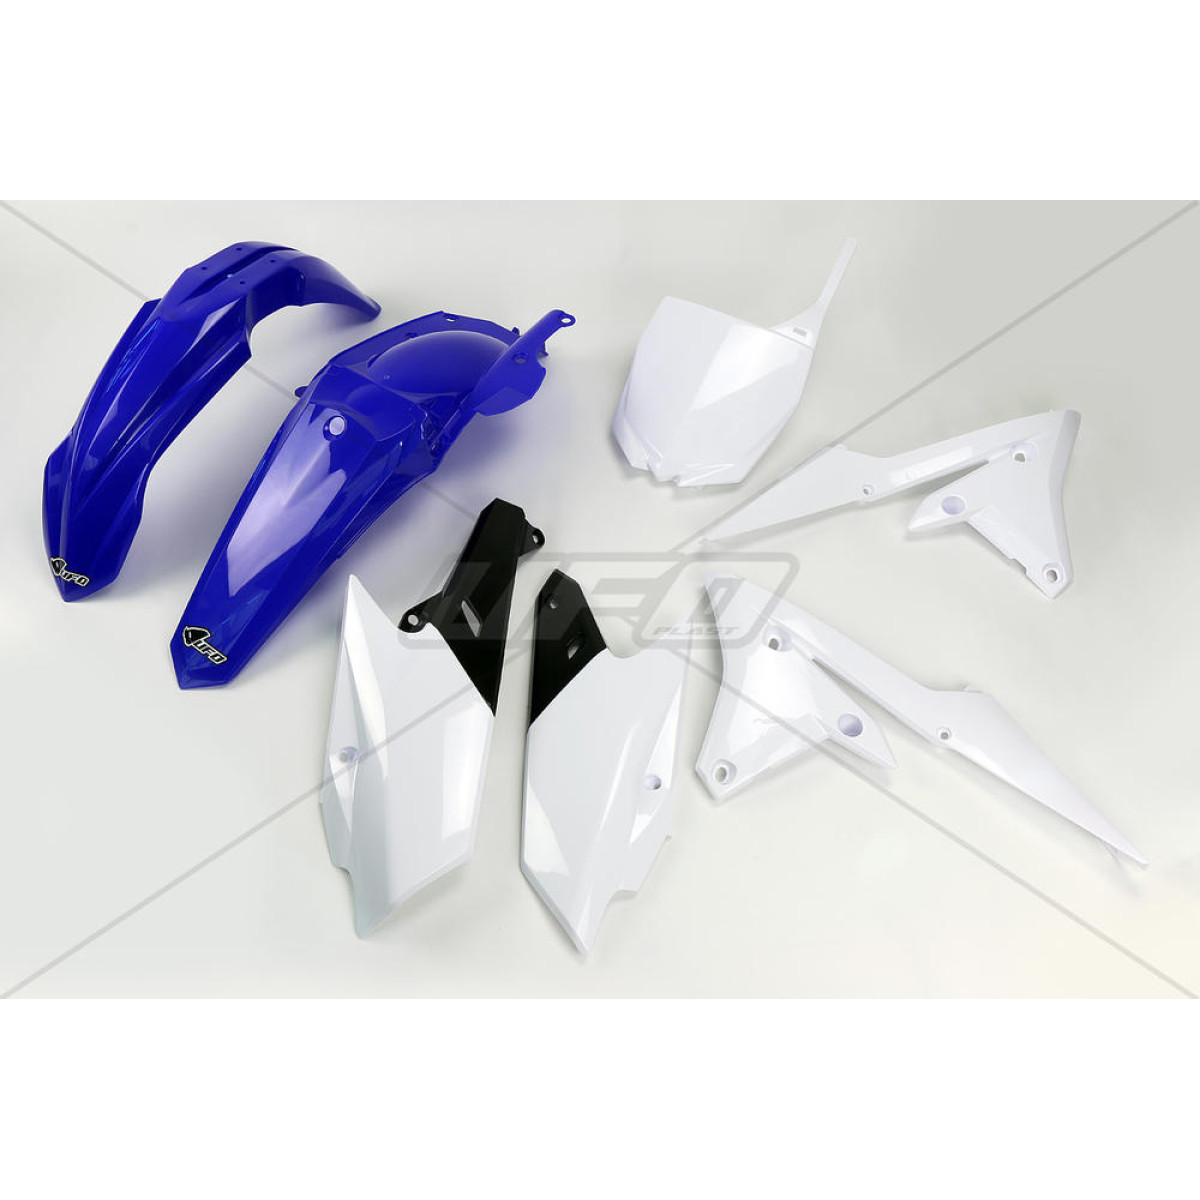 Kit plastice yamaha yzf 250-450 2014, albastru/alb, culoare oem